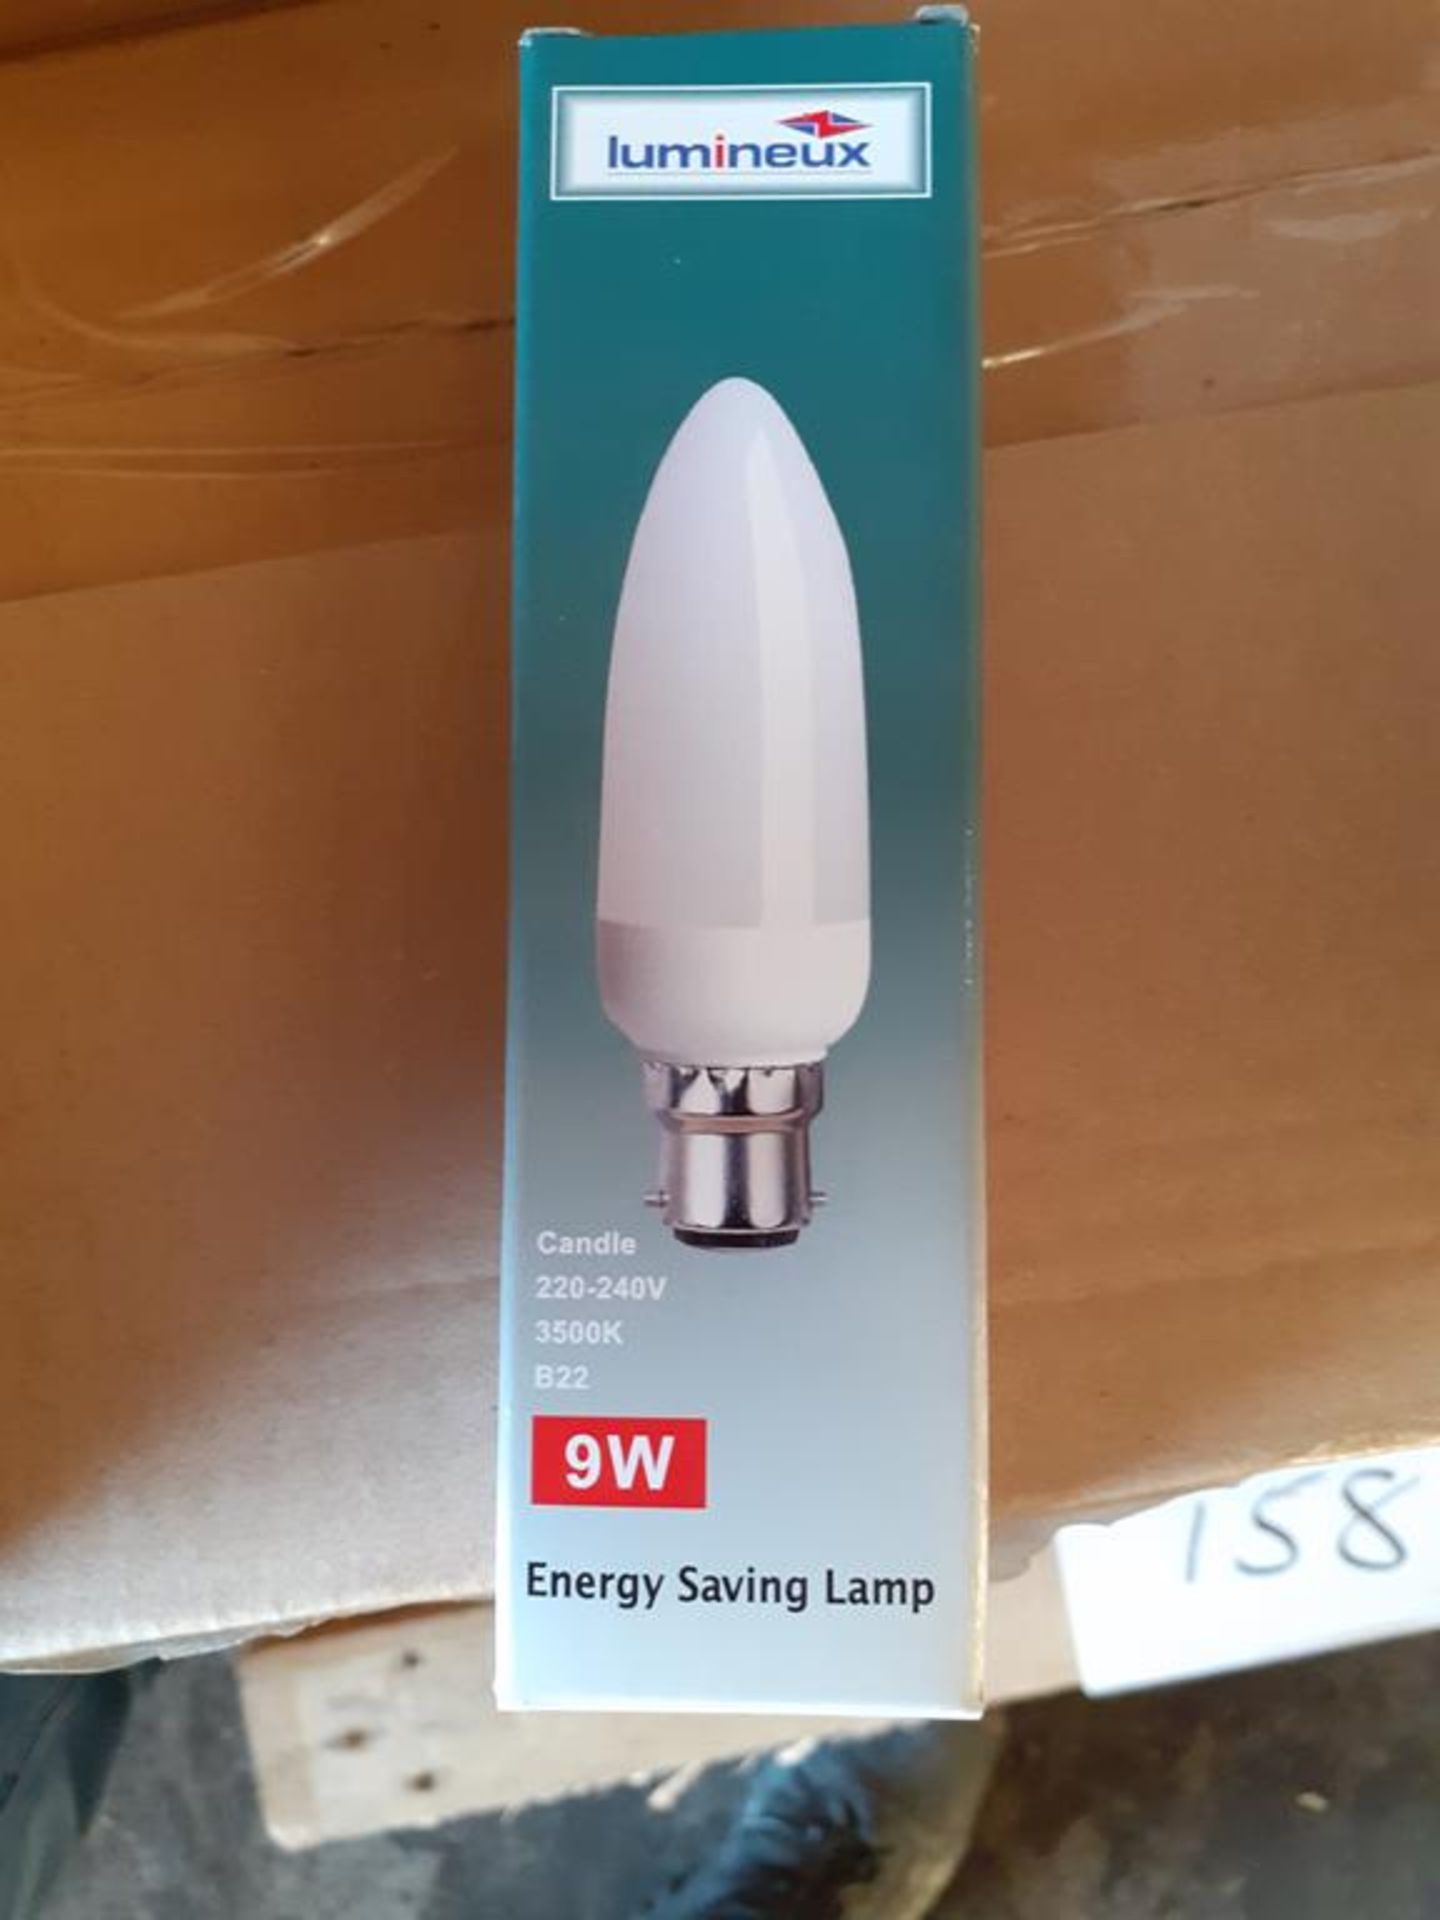 6x boxes of Lumineux Candle 9W B22 3500K 220-240V Energy Saving Light Bulbs (50pcs per box) - Image 3 of 4